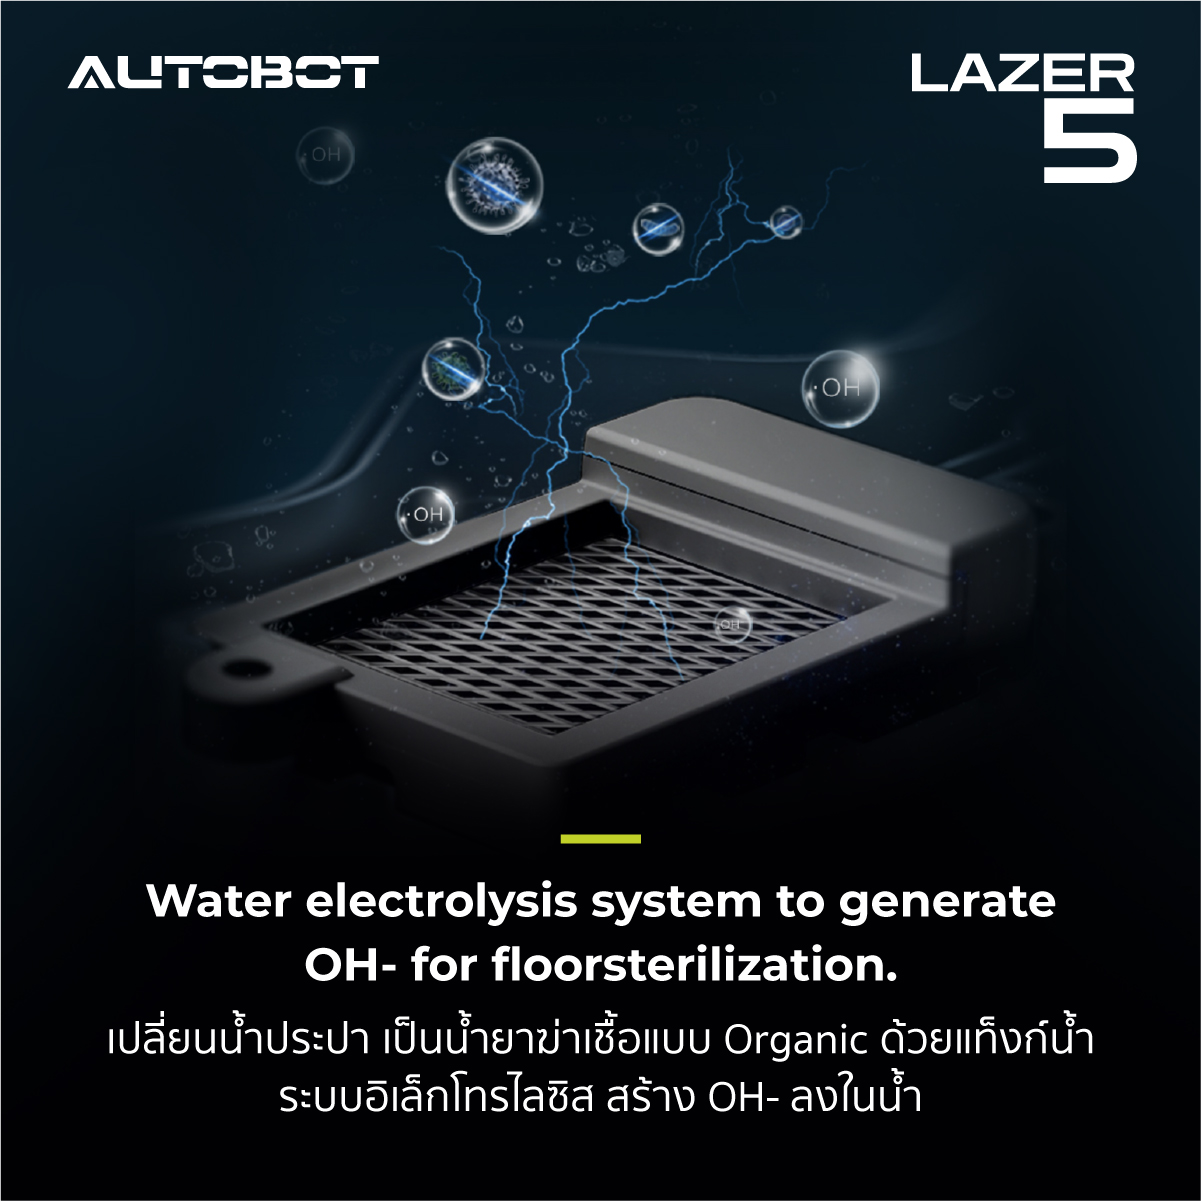 AUTOBOT Lazer 5 หุ่นยนต์ดูดฝุ่น แท้งค์ถูพื้นระบบสั้น Electro water tank สร้าง hydroxide ion พร้อมถังทิ้งฝุ่นอัตโนมัติ Robotic Vacuum